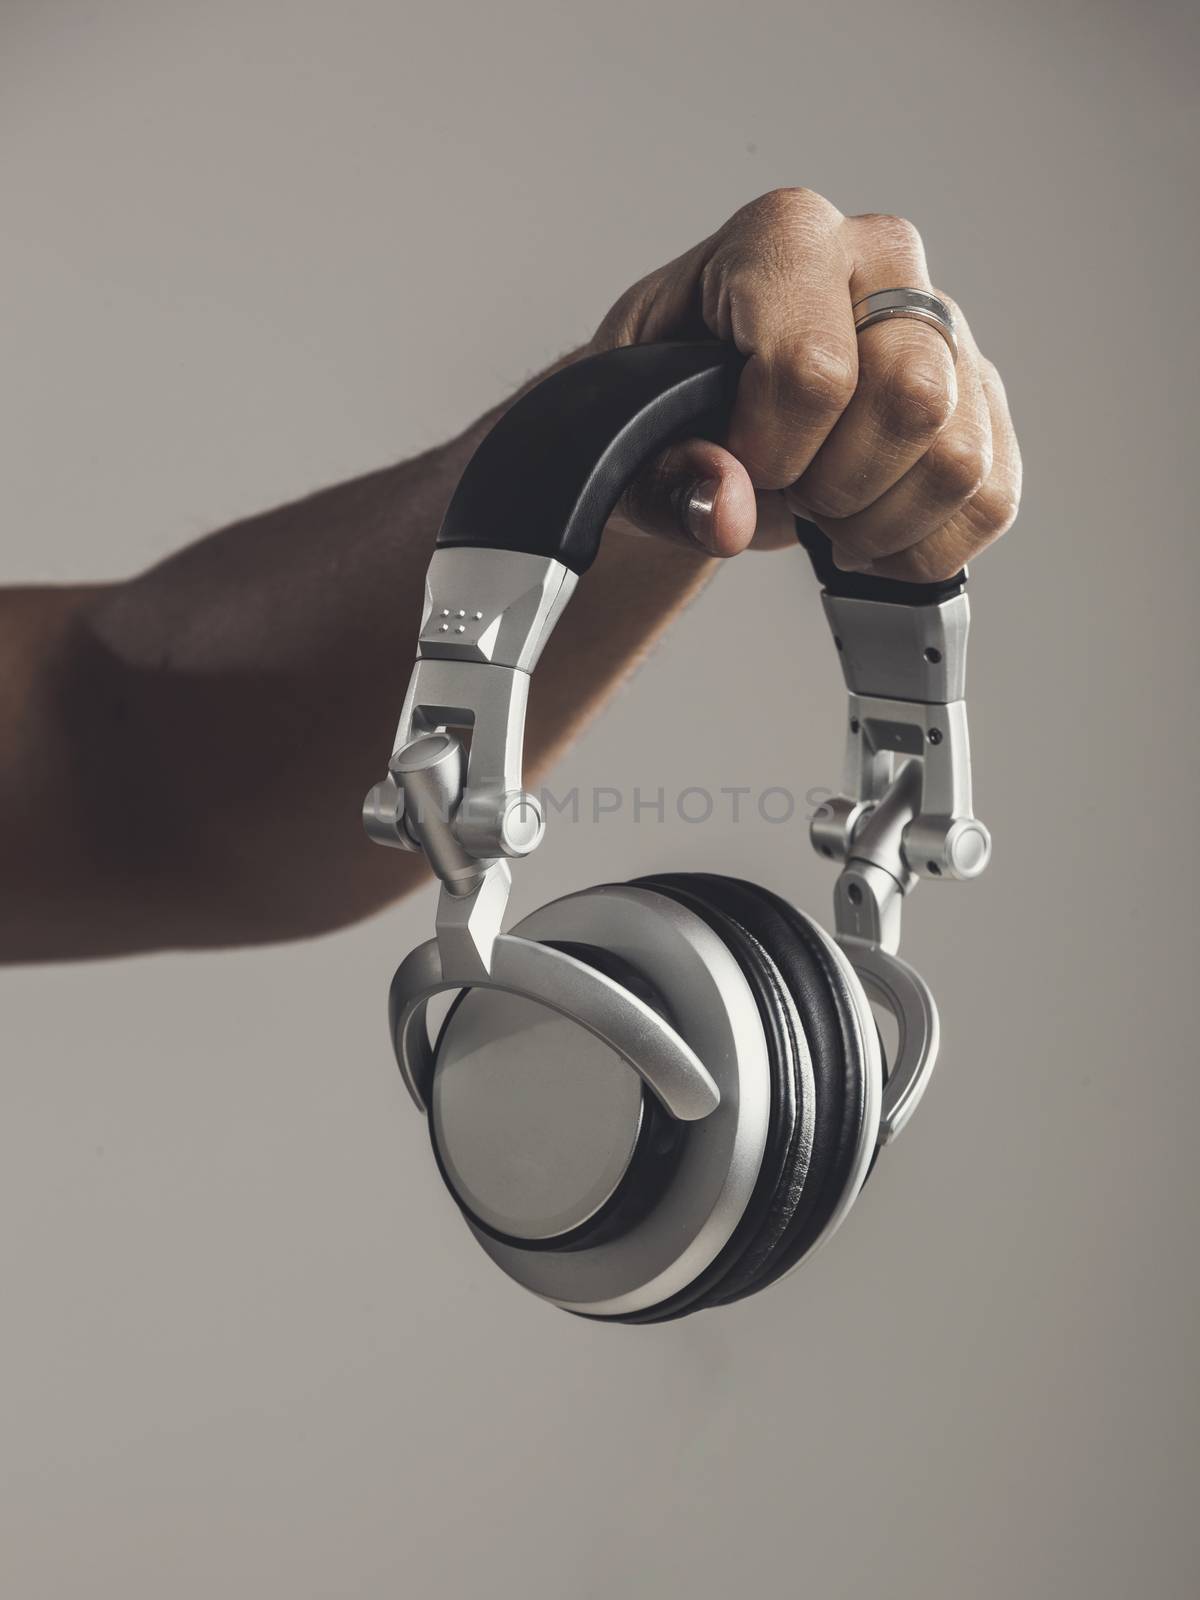 DJ hand holding his headphones